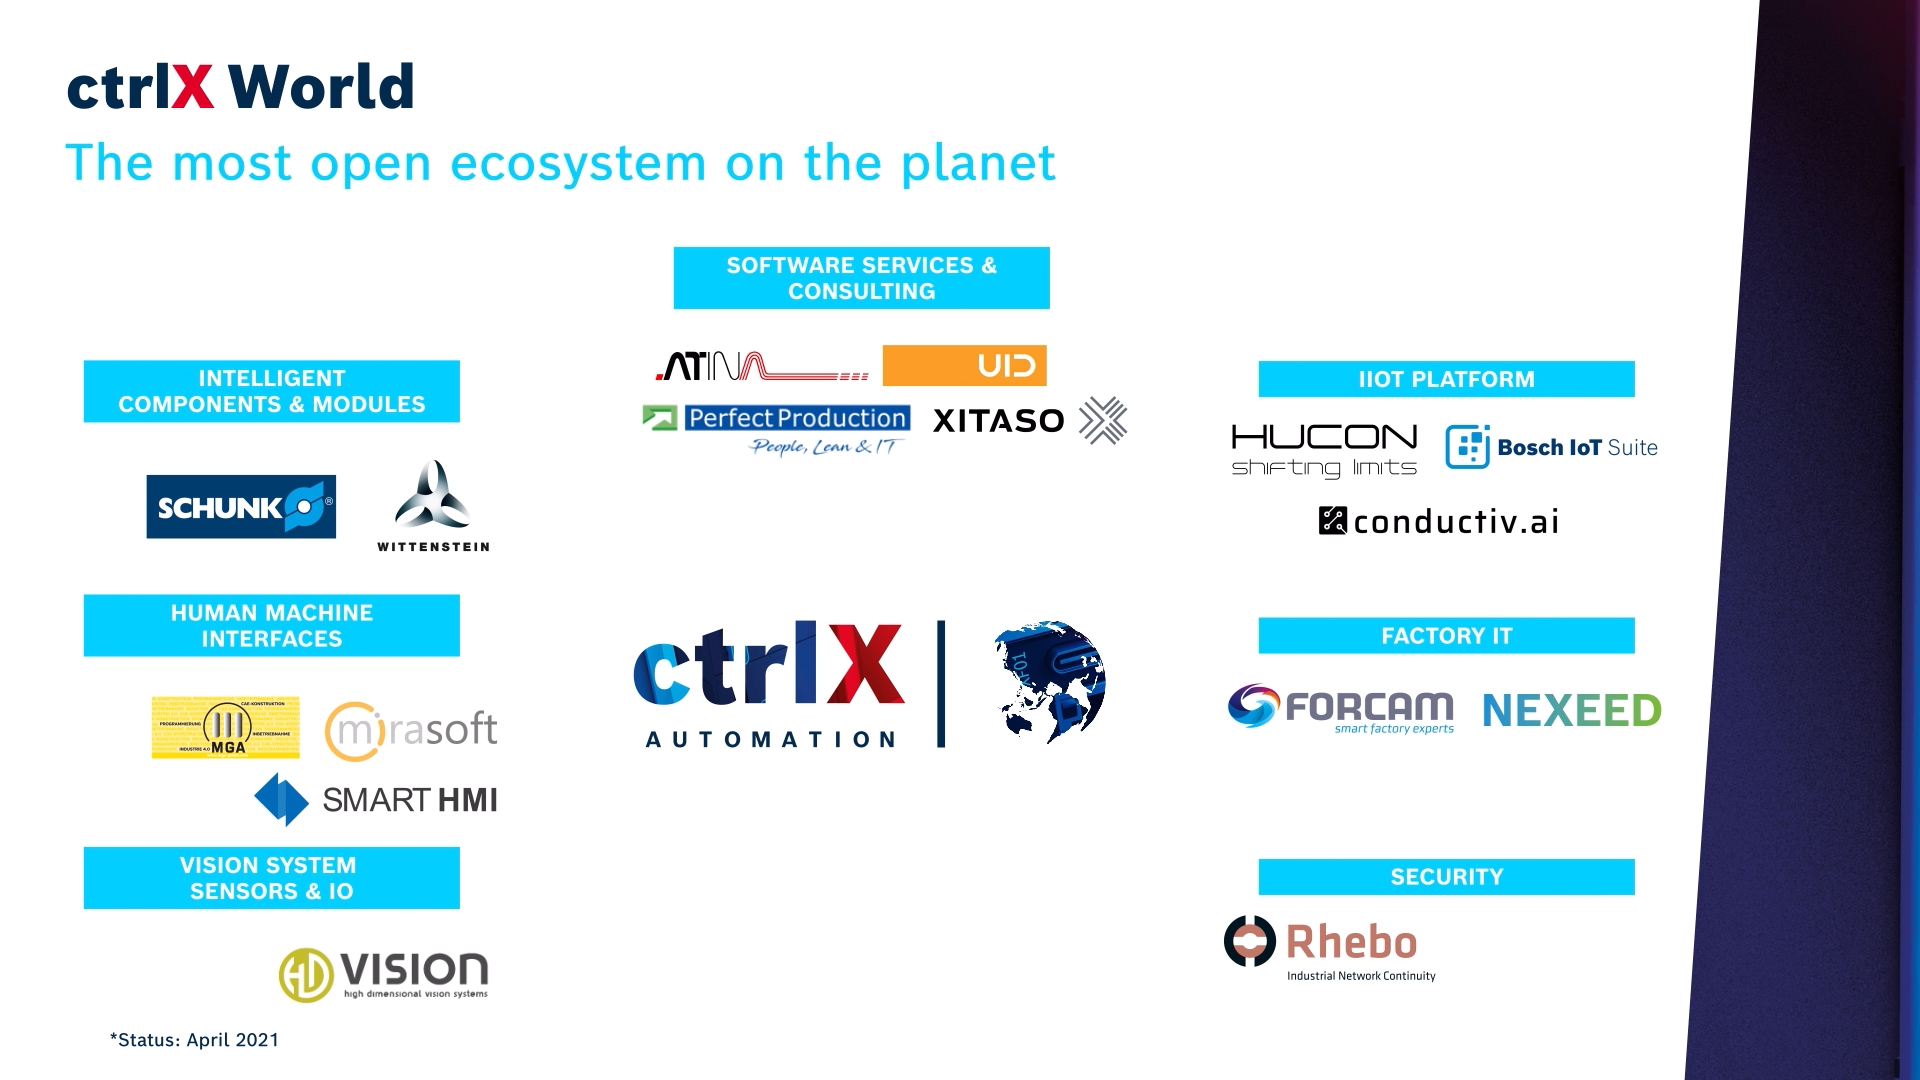 Figure 3. The ctrlX World ecosystem